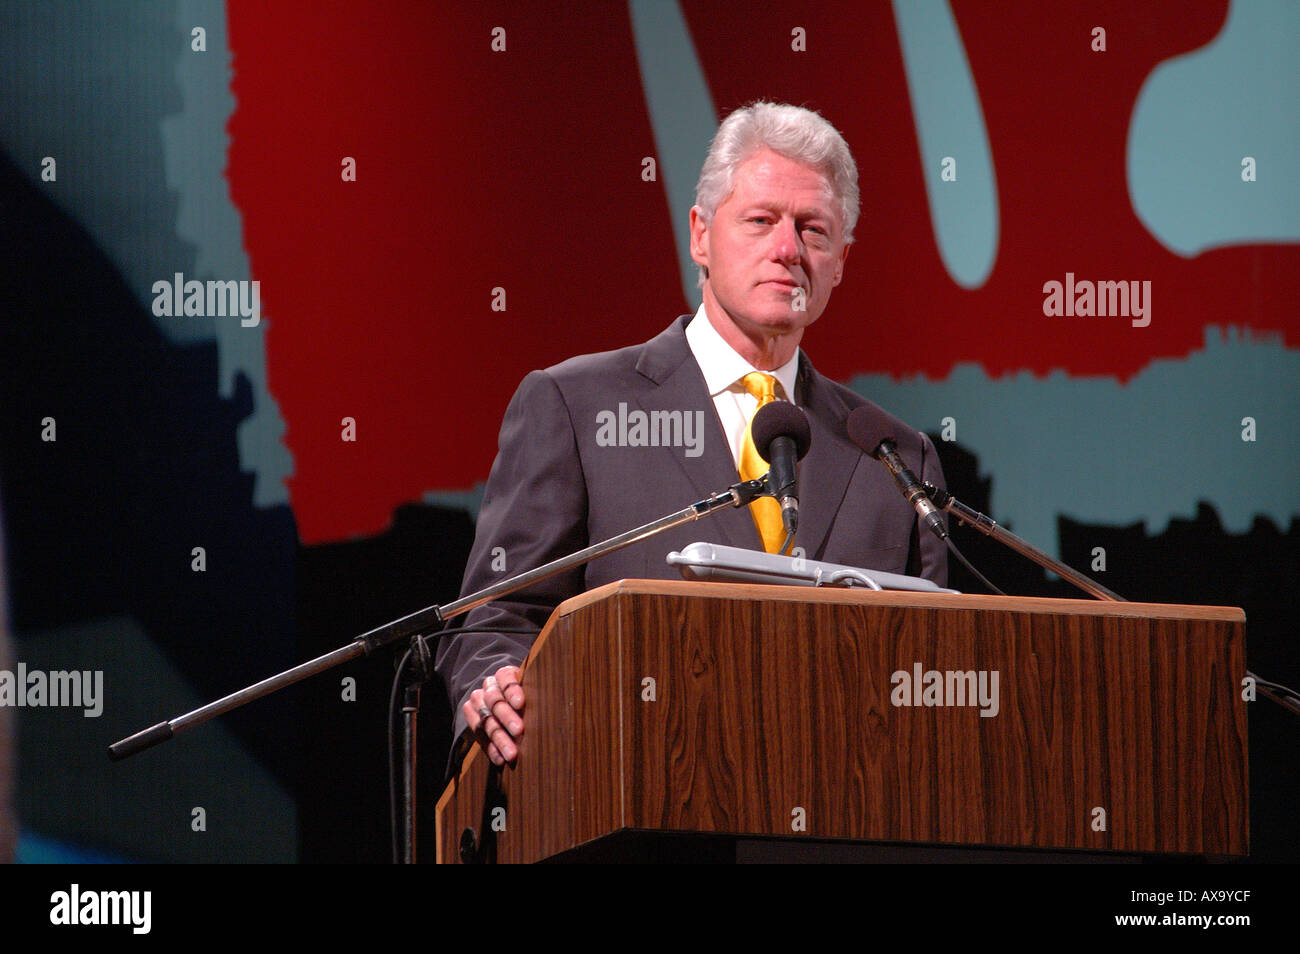 Former American President Bill Clinton at podium Stock Photo